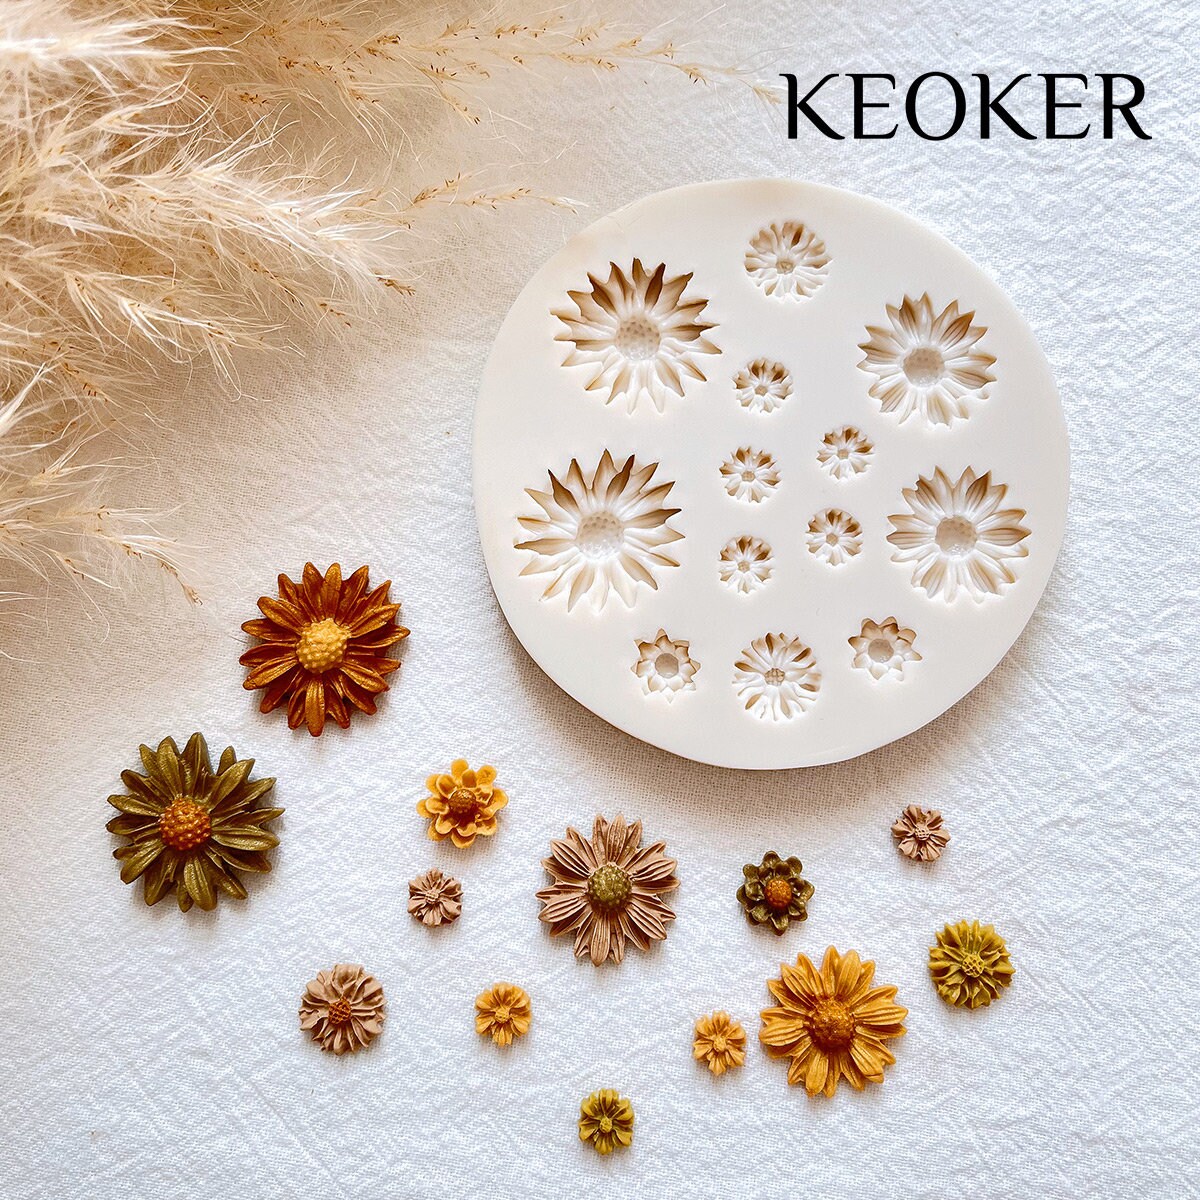 Keoker Flower Petal Clay Cutters - Flower Petals Clay Cutters for